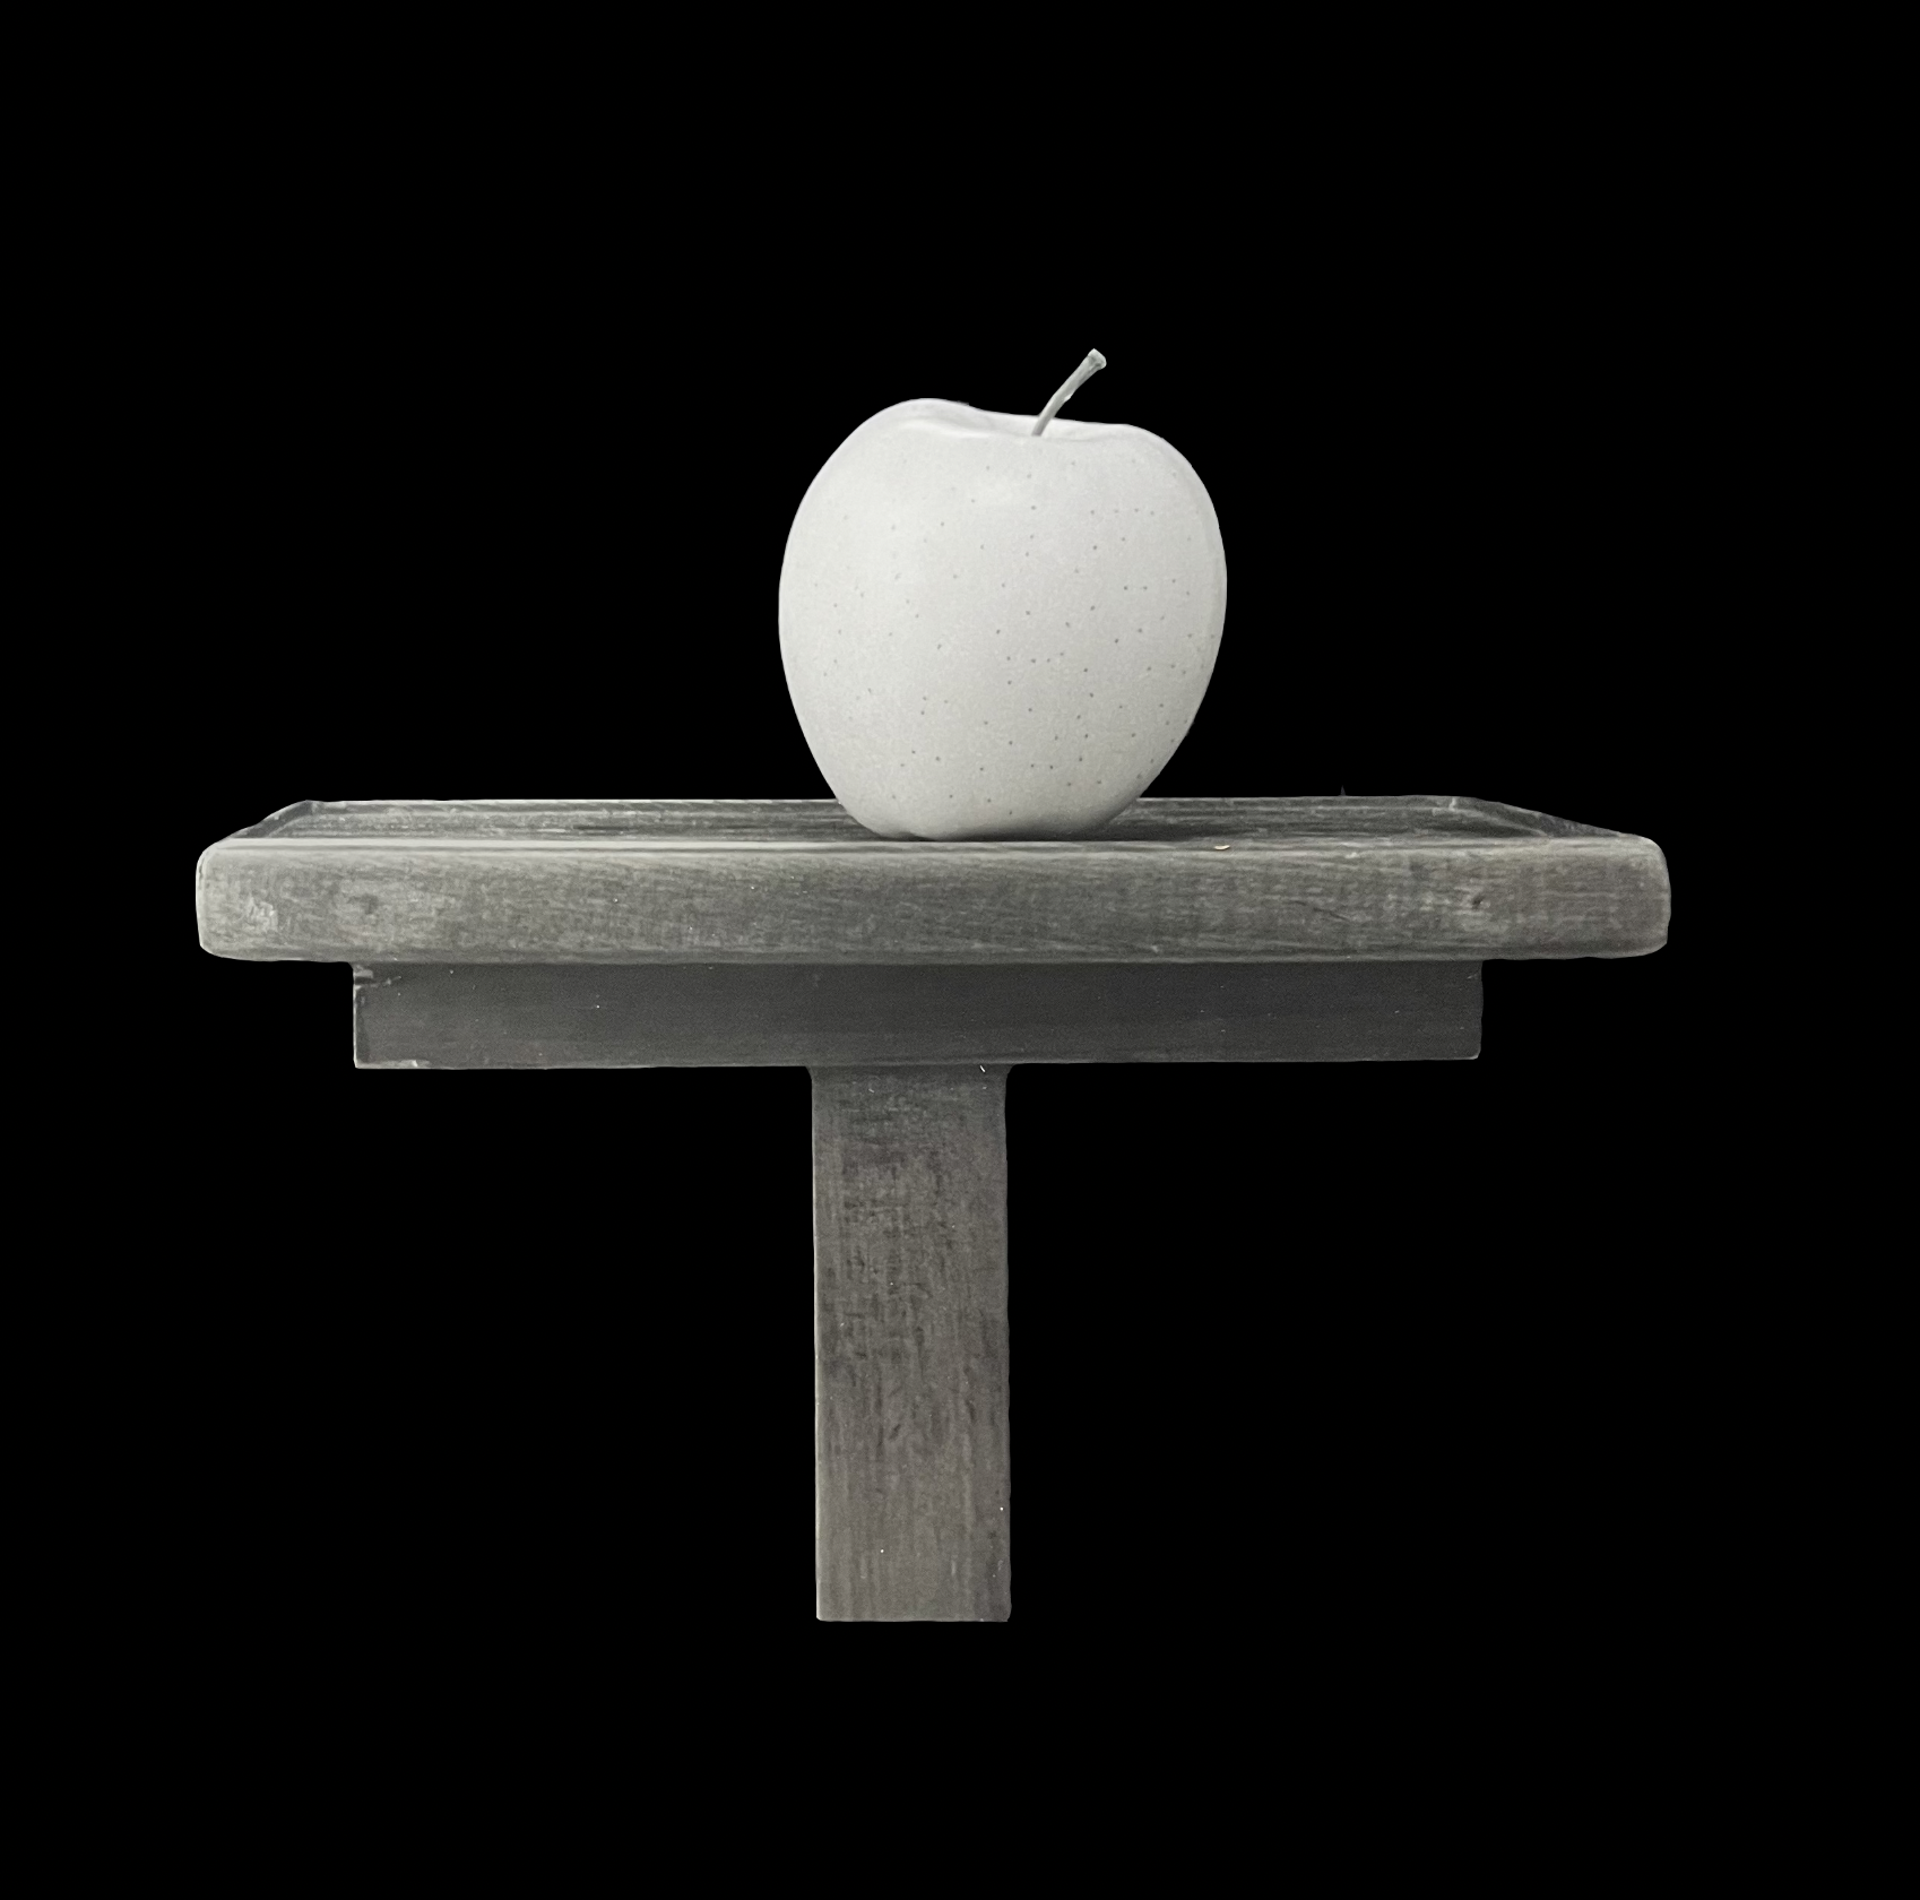 Apple by MaryAnn Bushweller